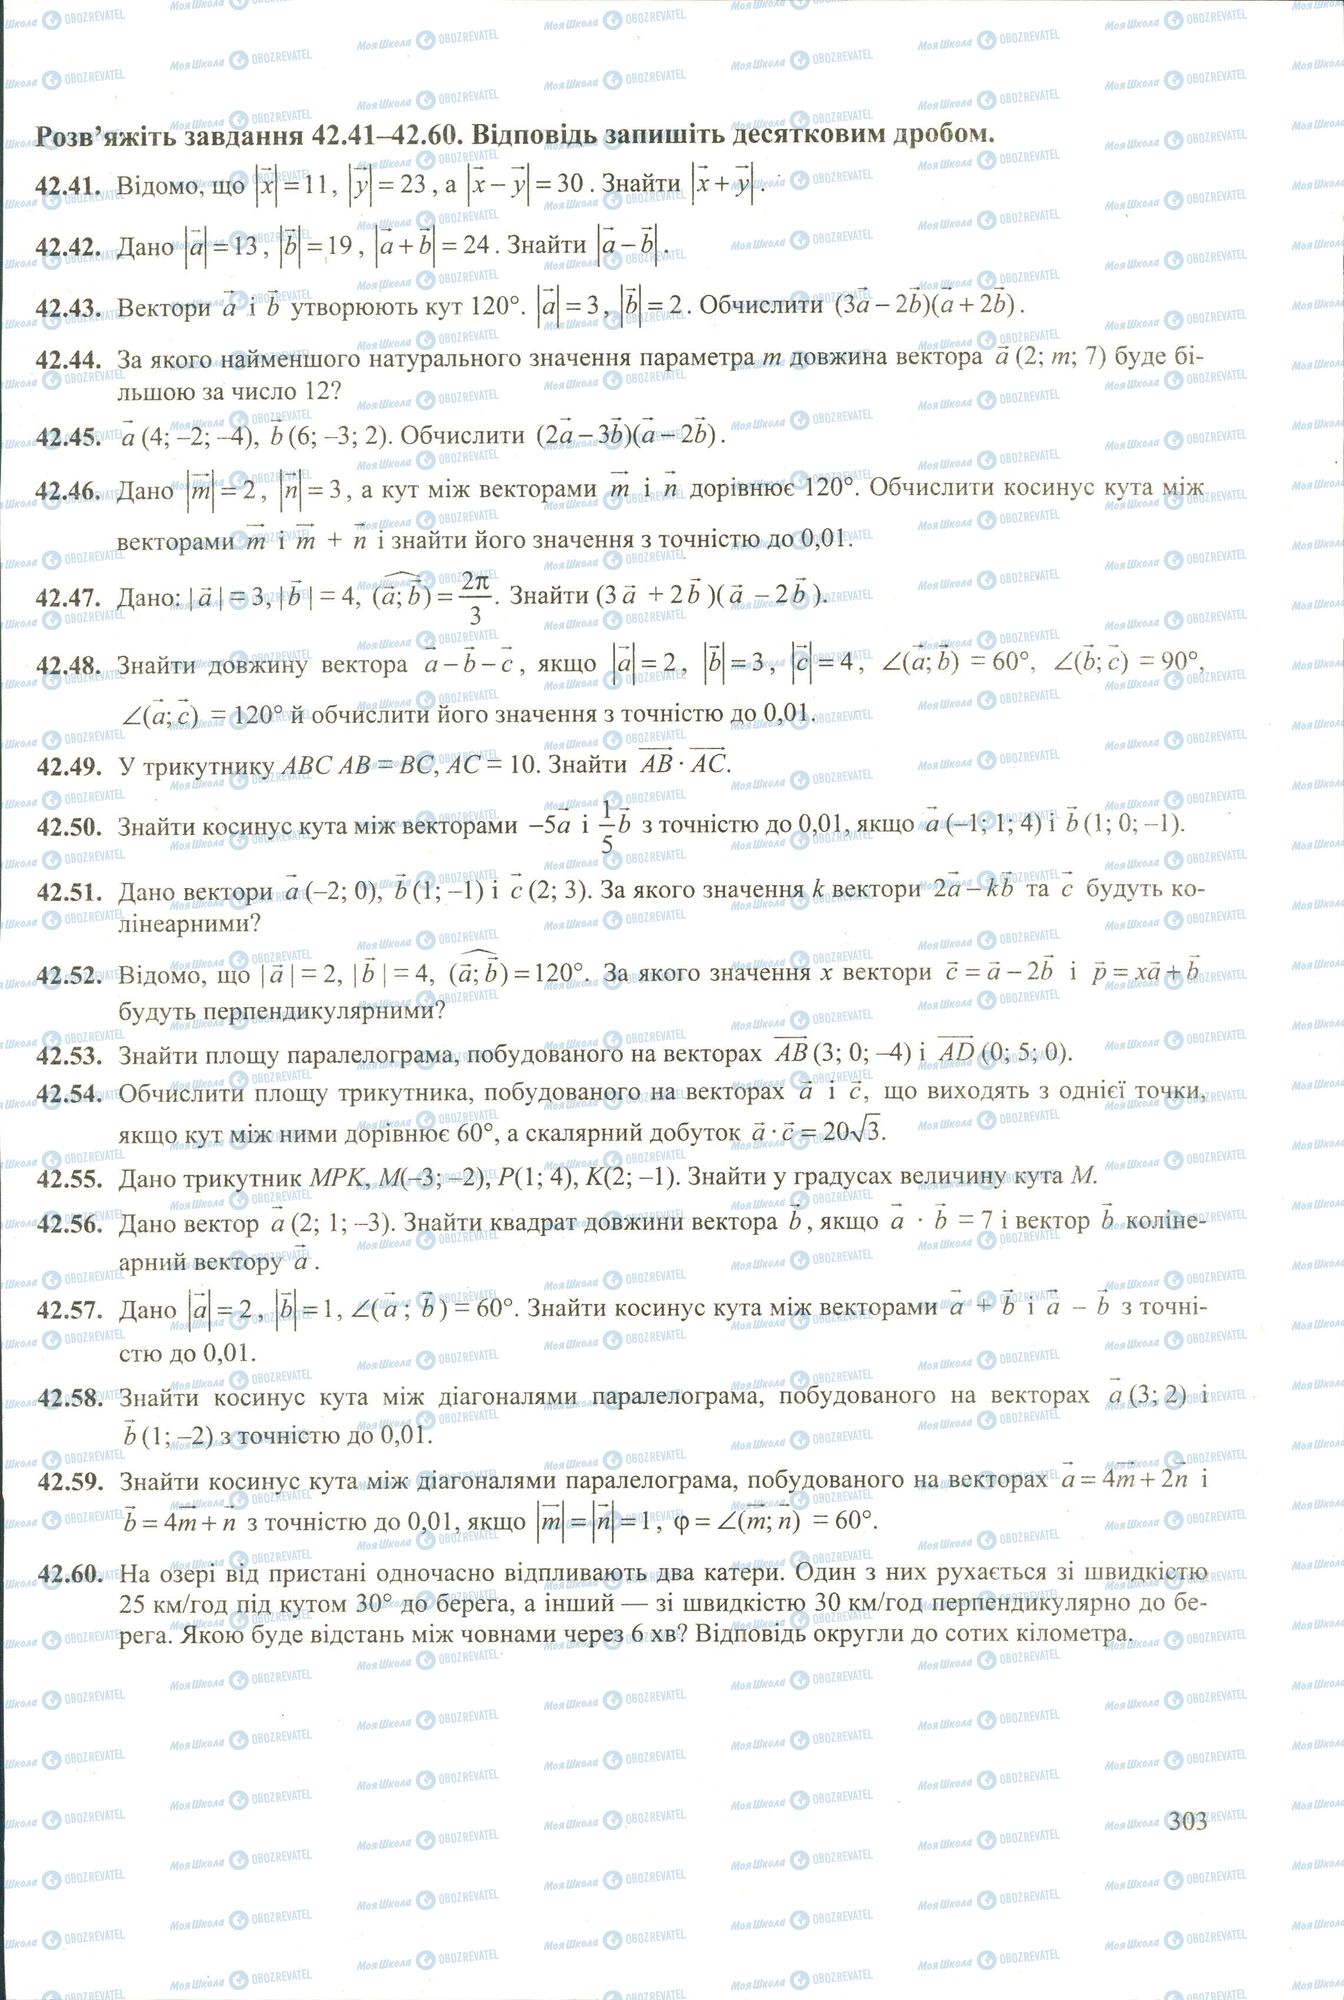 ЗНО Математика 11 класс страница 41-60